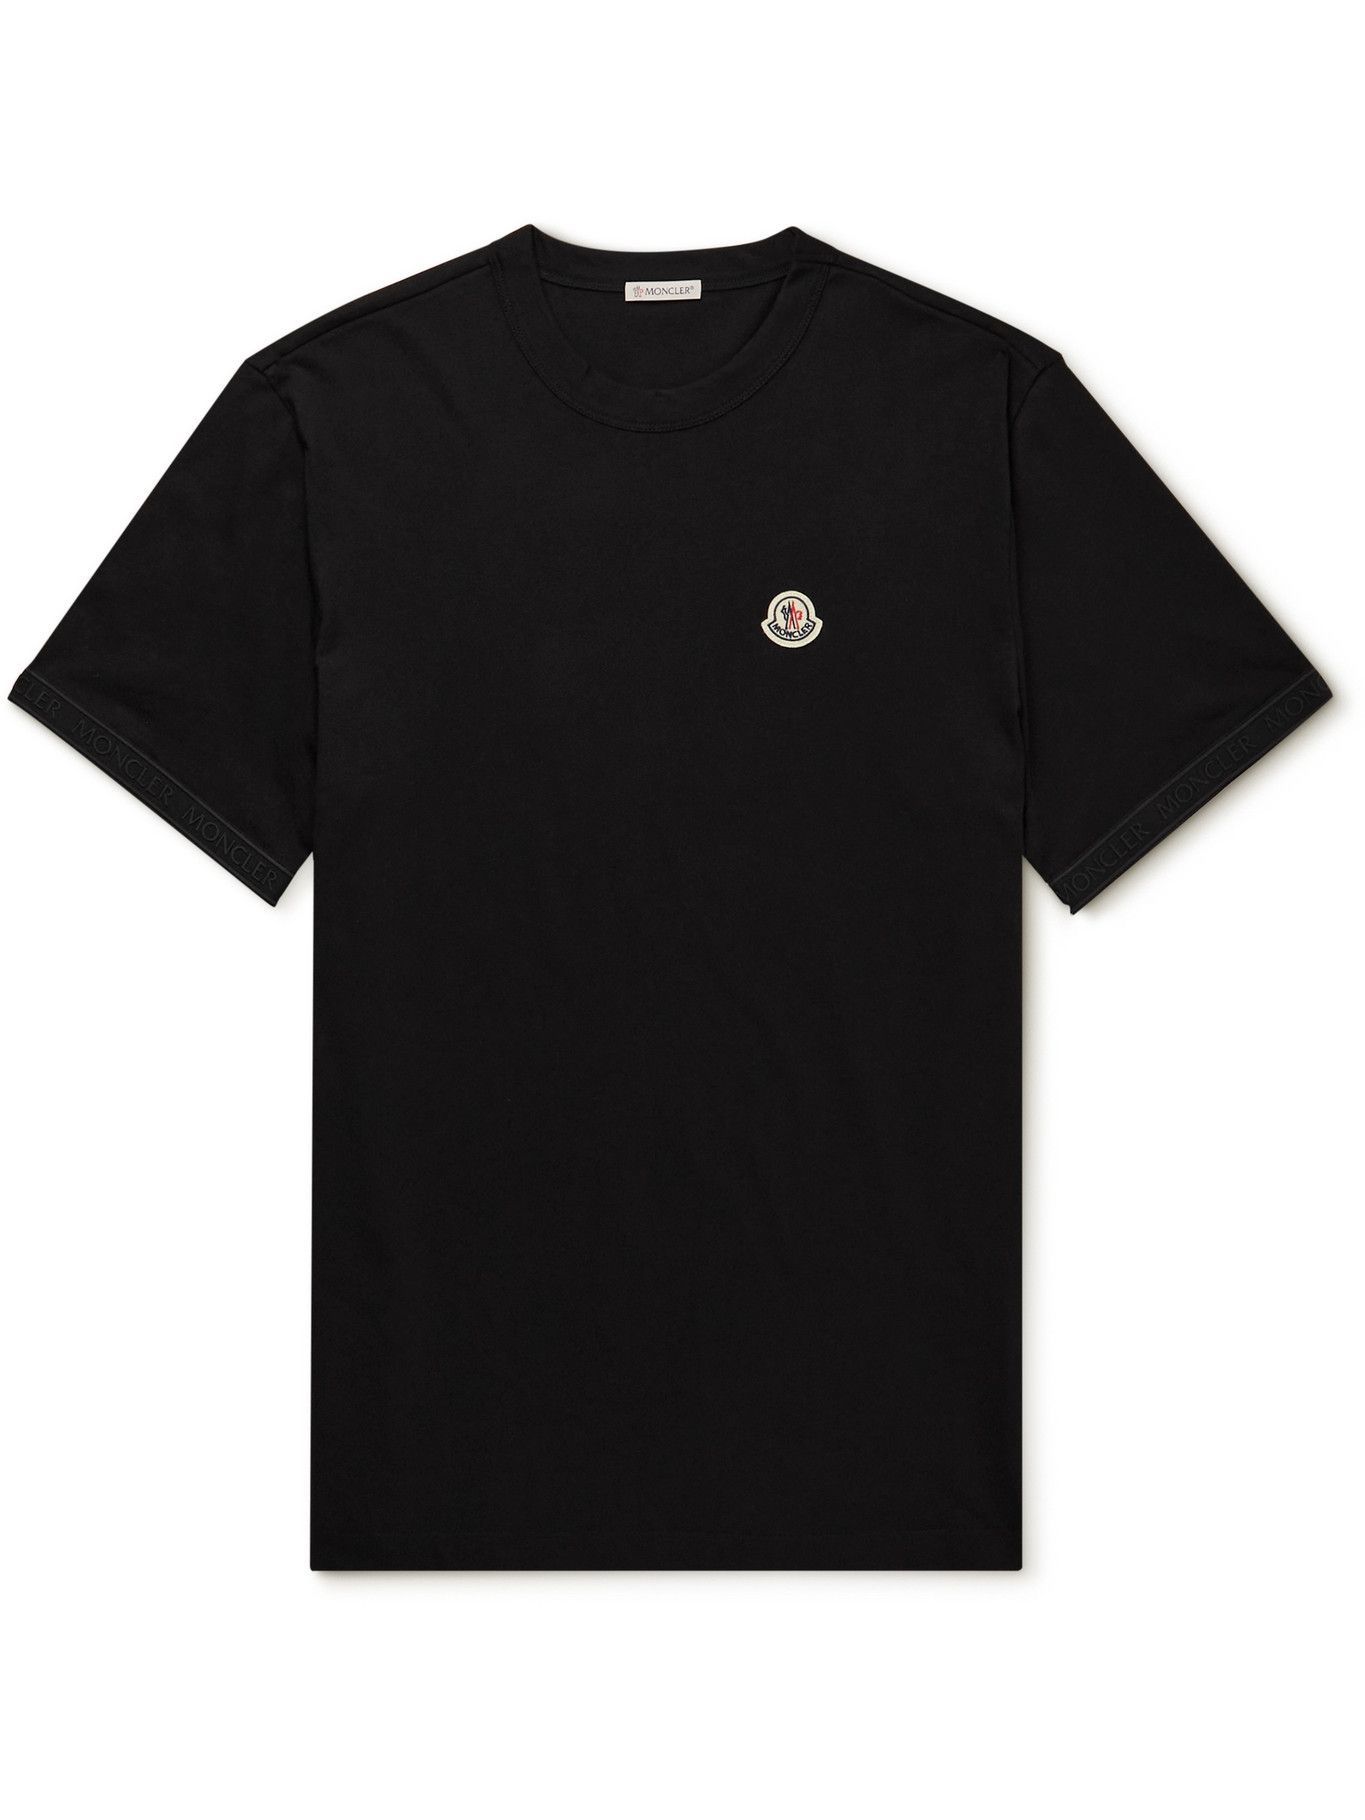 Moncler - Logo-Appliquéd Cotton-Jersey T-Shirt - Black Moncler